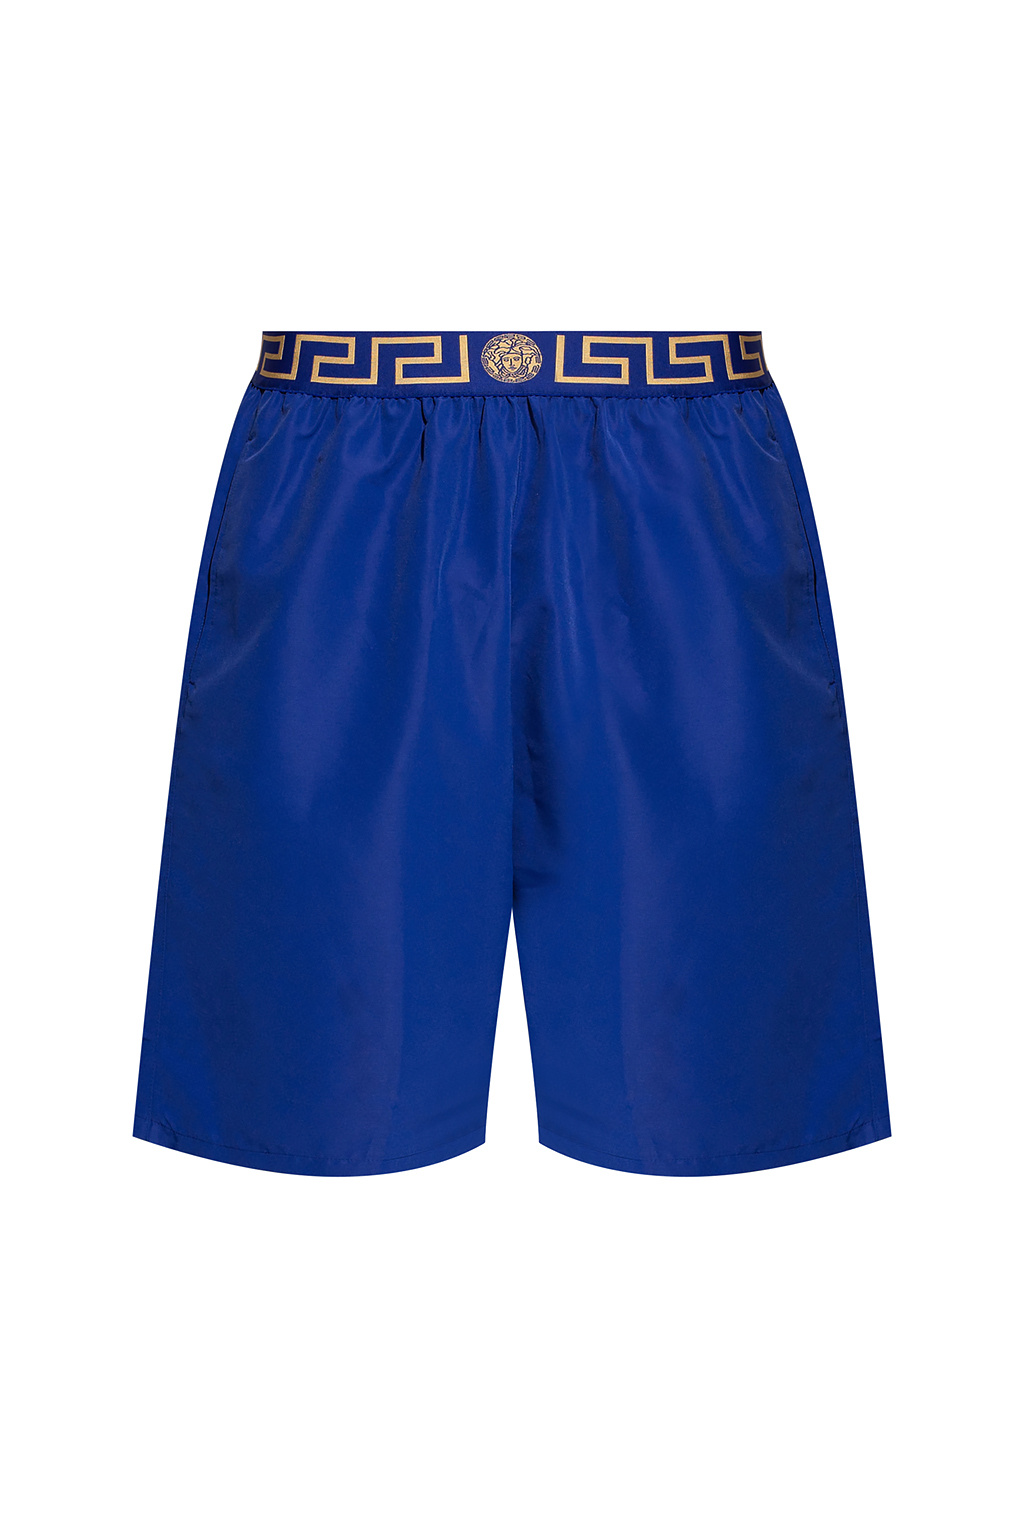 Versace Board blue shorts